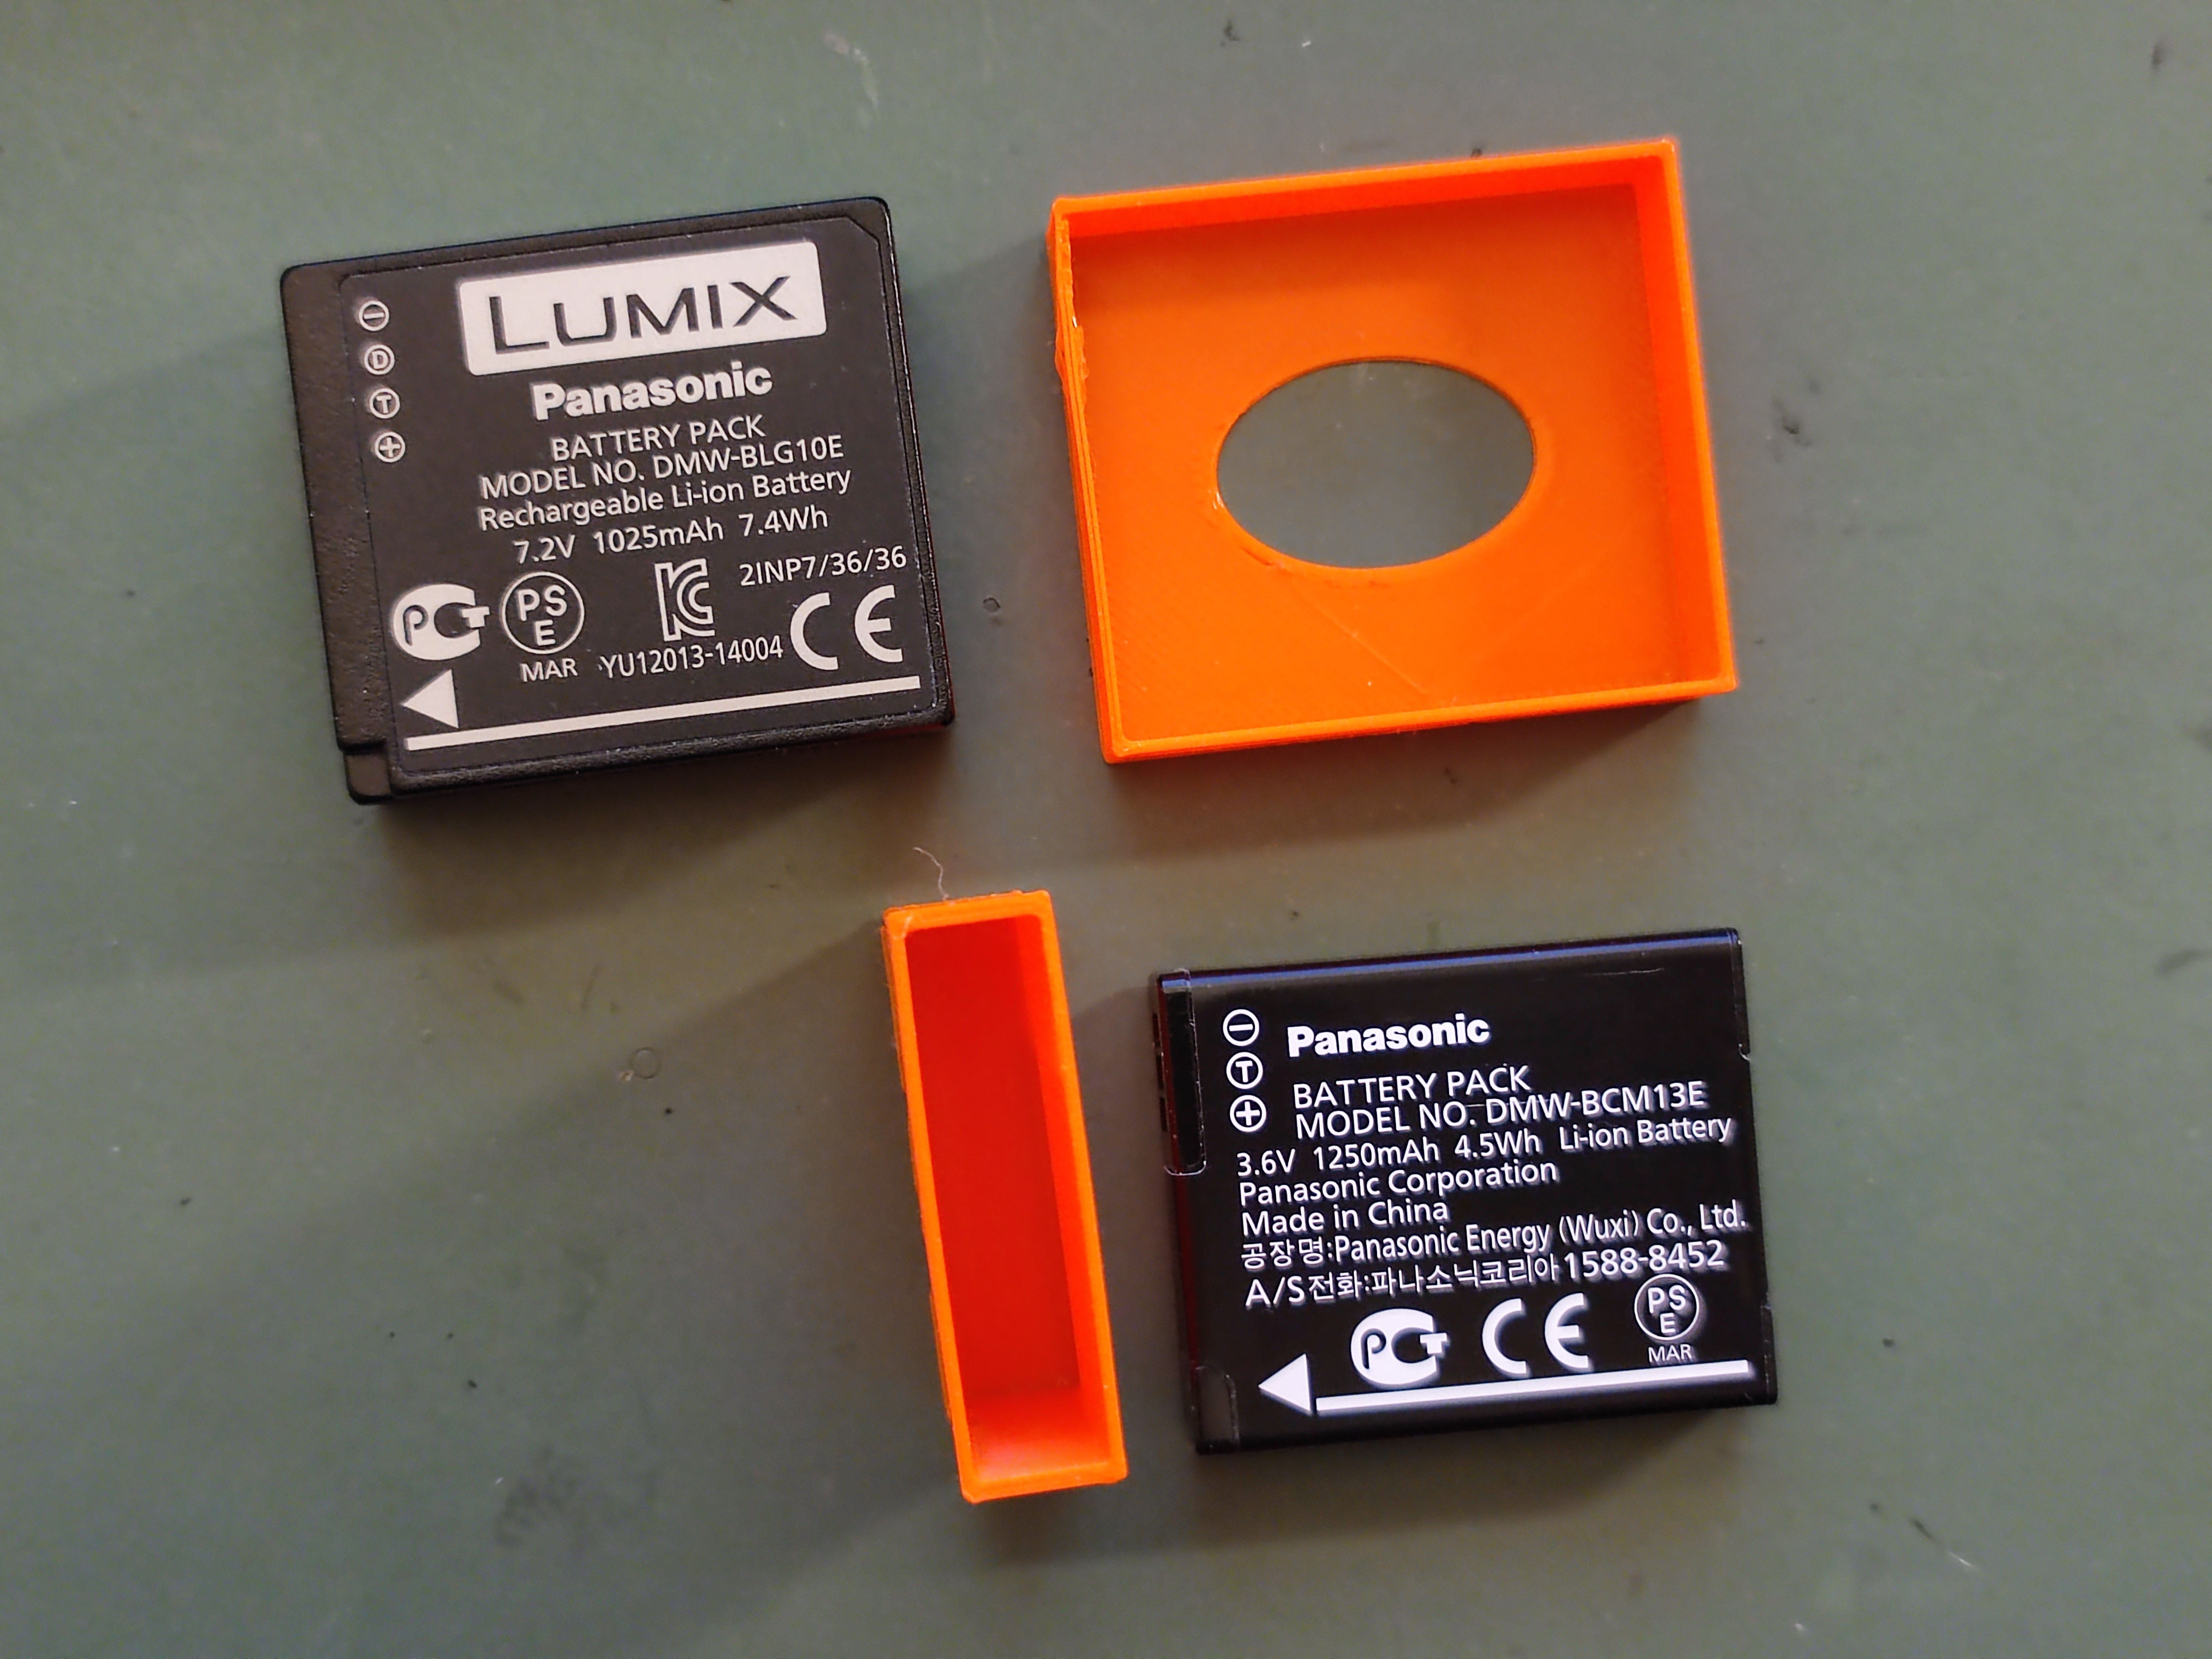 Battery cases for Panasonic Lumix DMW-BLG10E and DMW-BCM13E